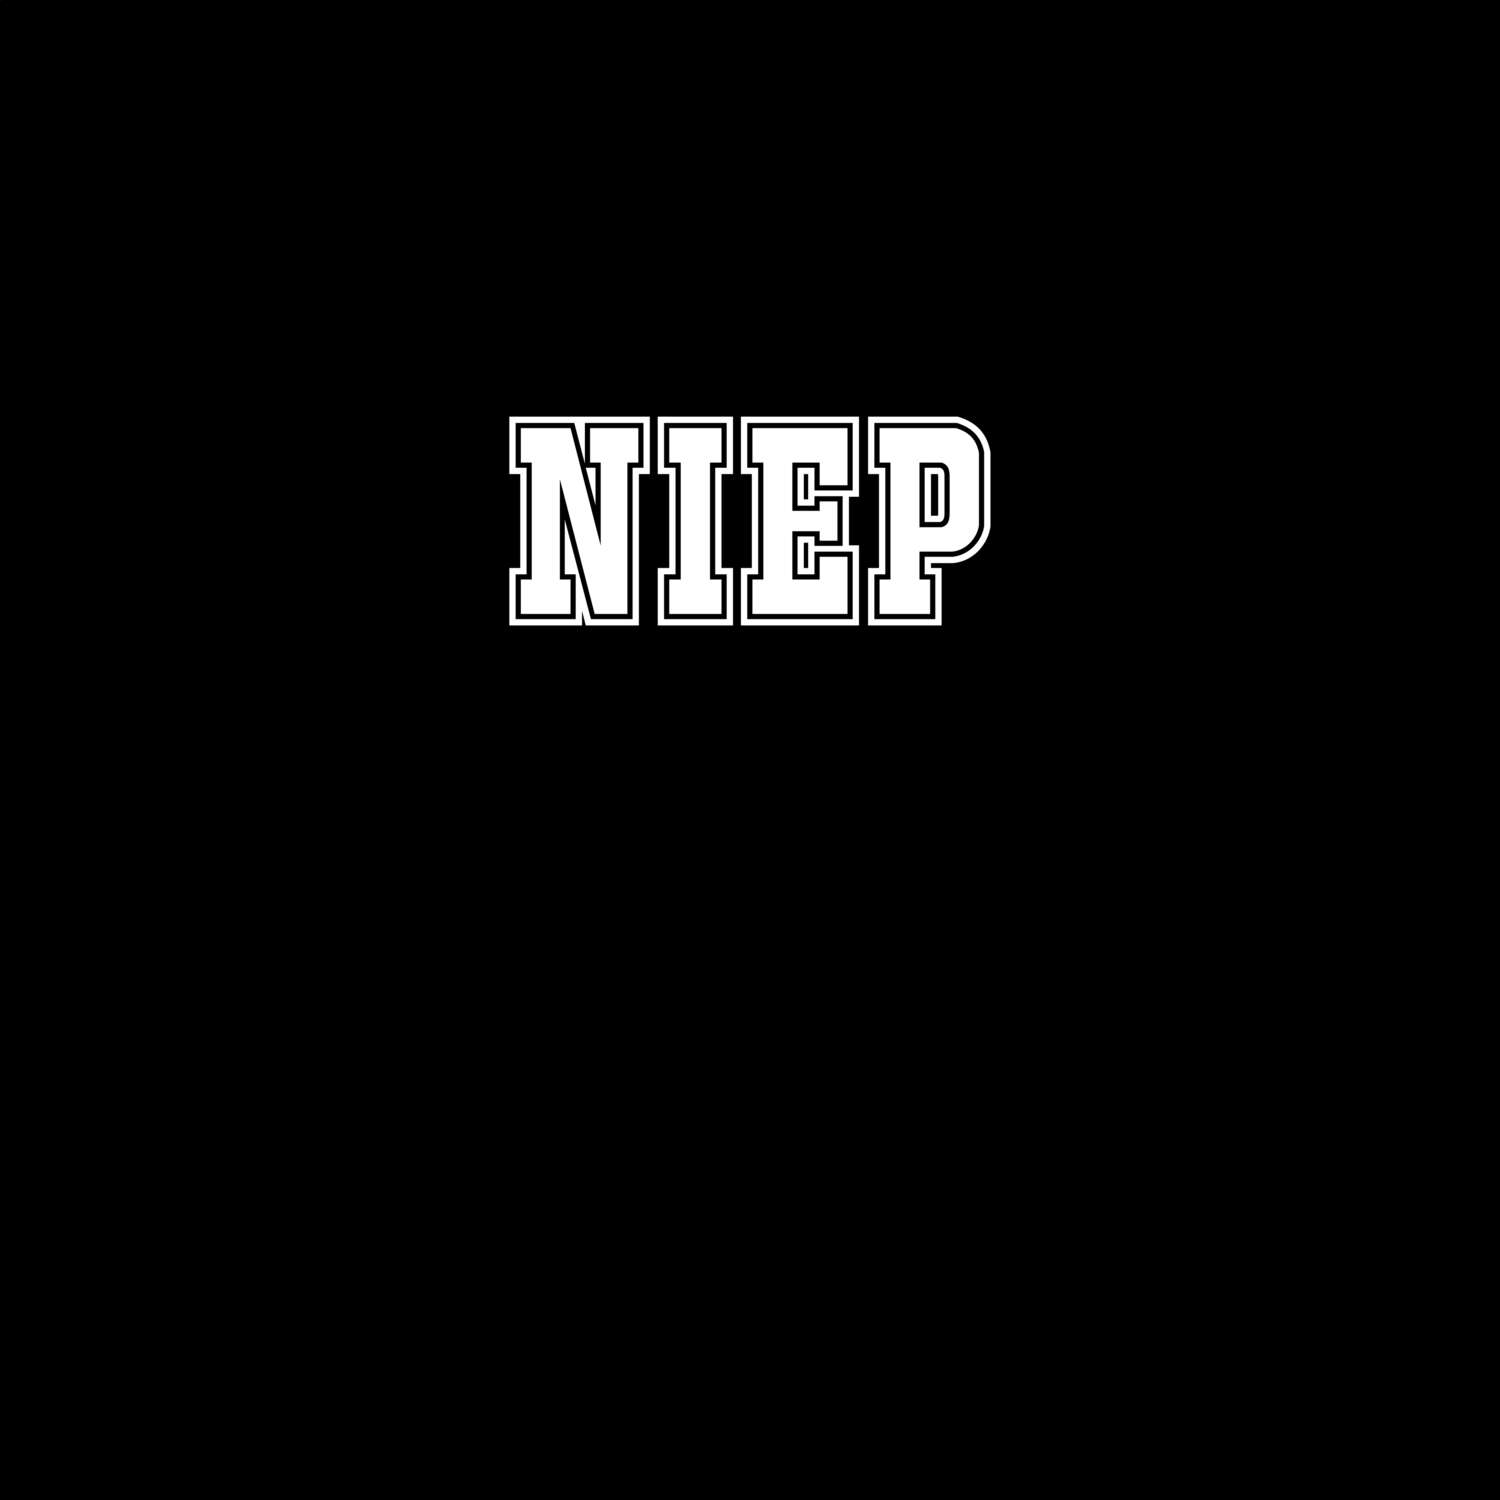 Niep T-Shirt »Classic«